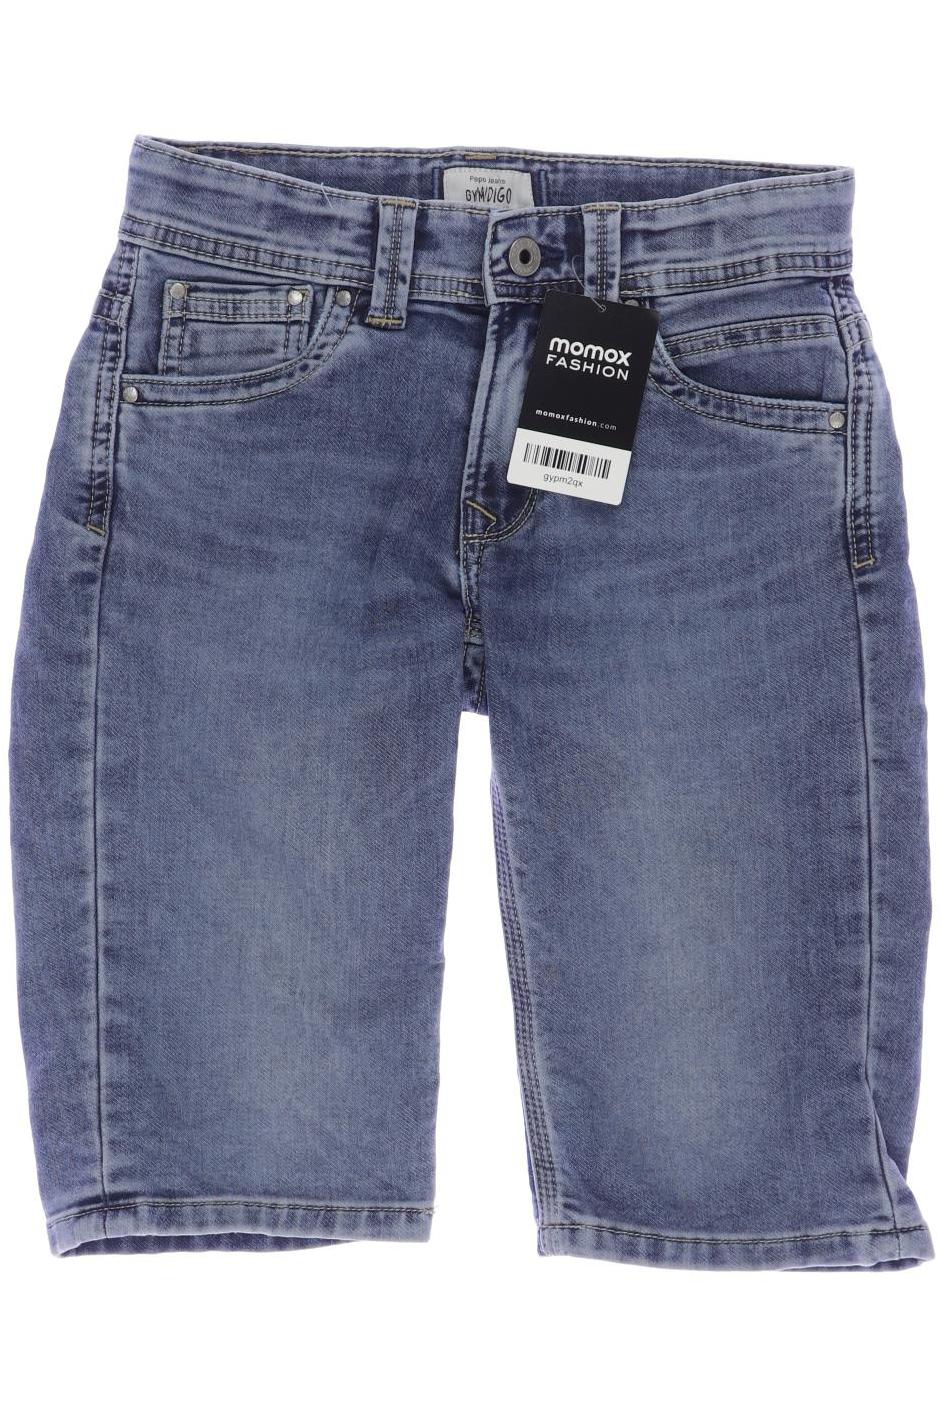 Pepe Jeans Jungen Shorts, blau von Pepe Jeans